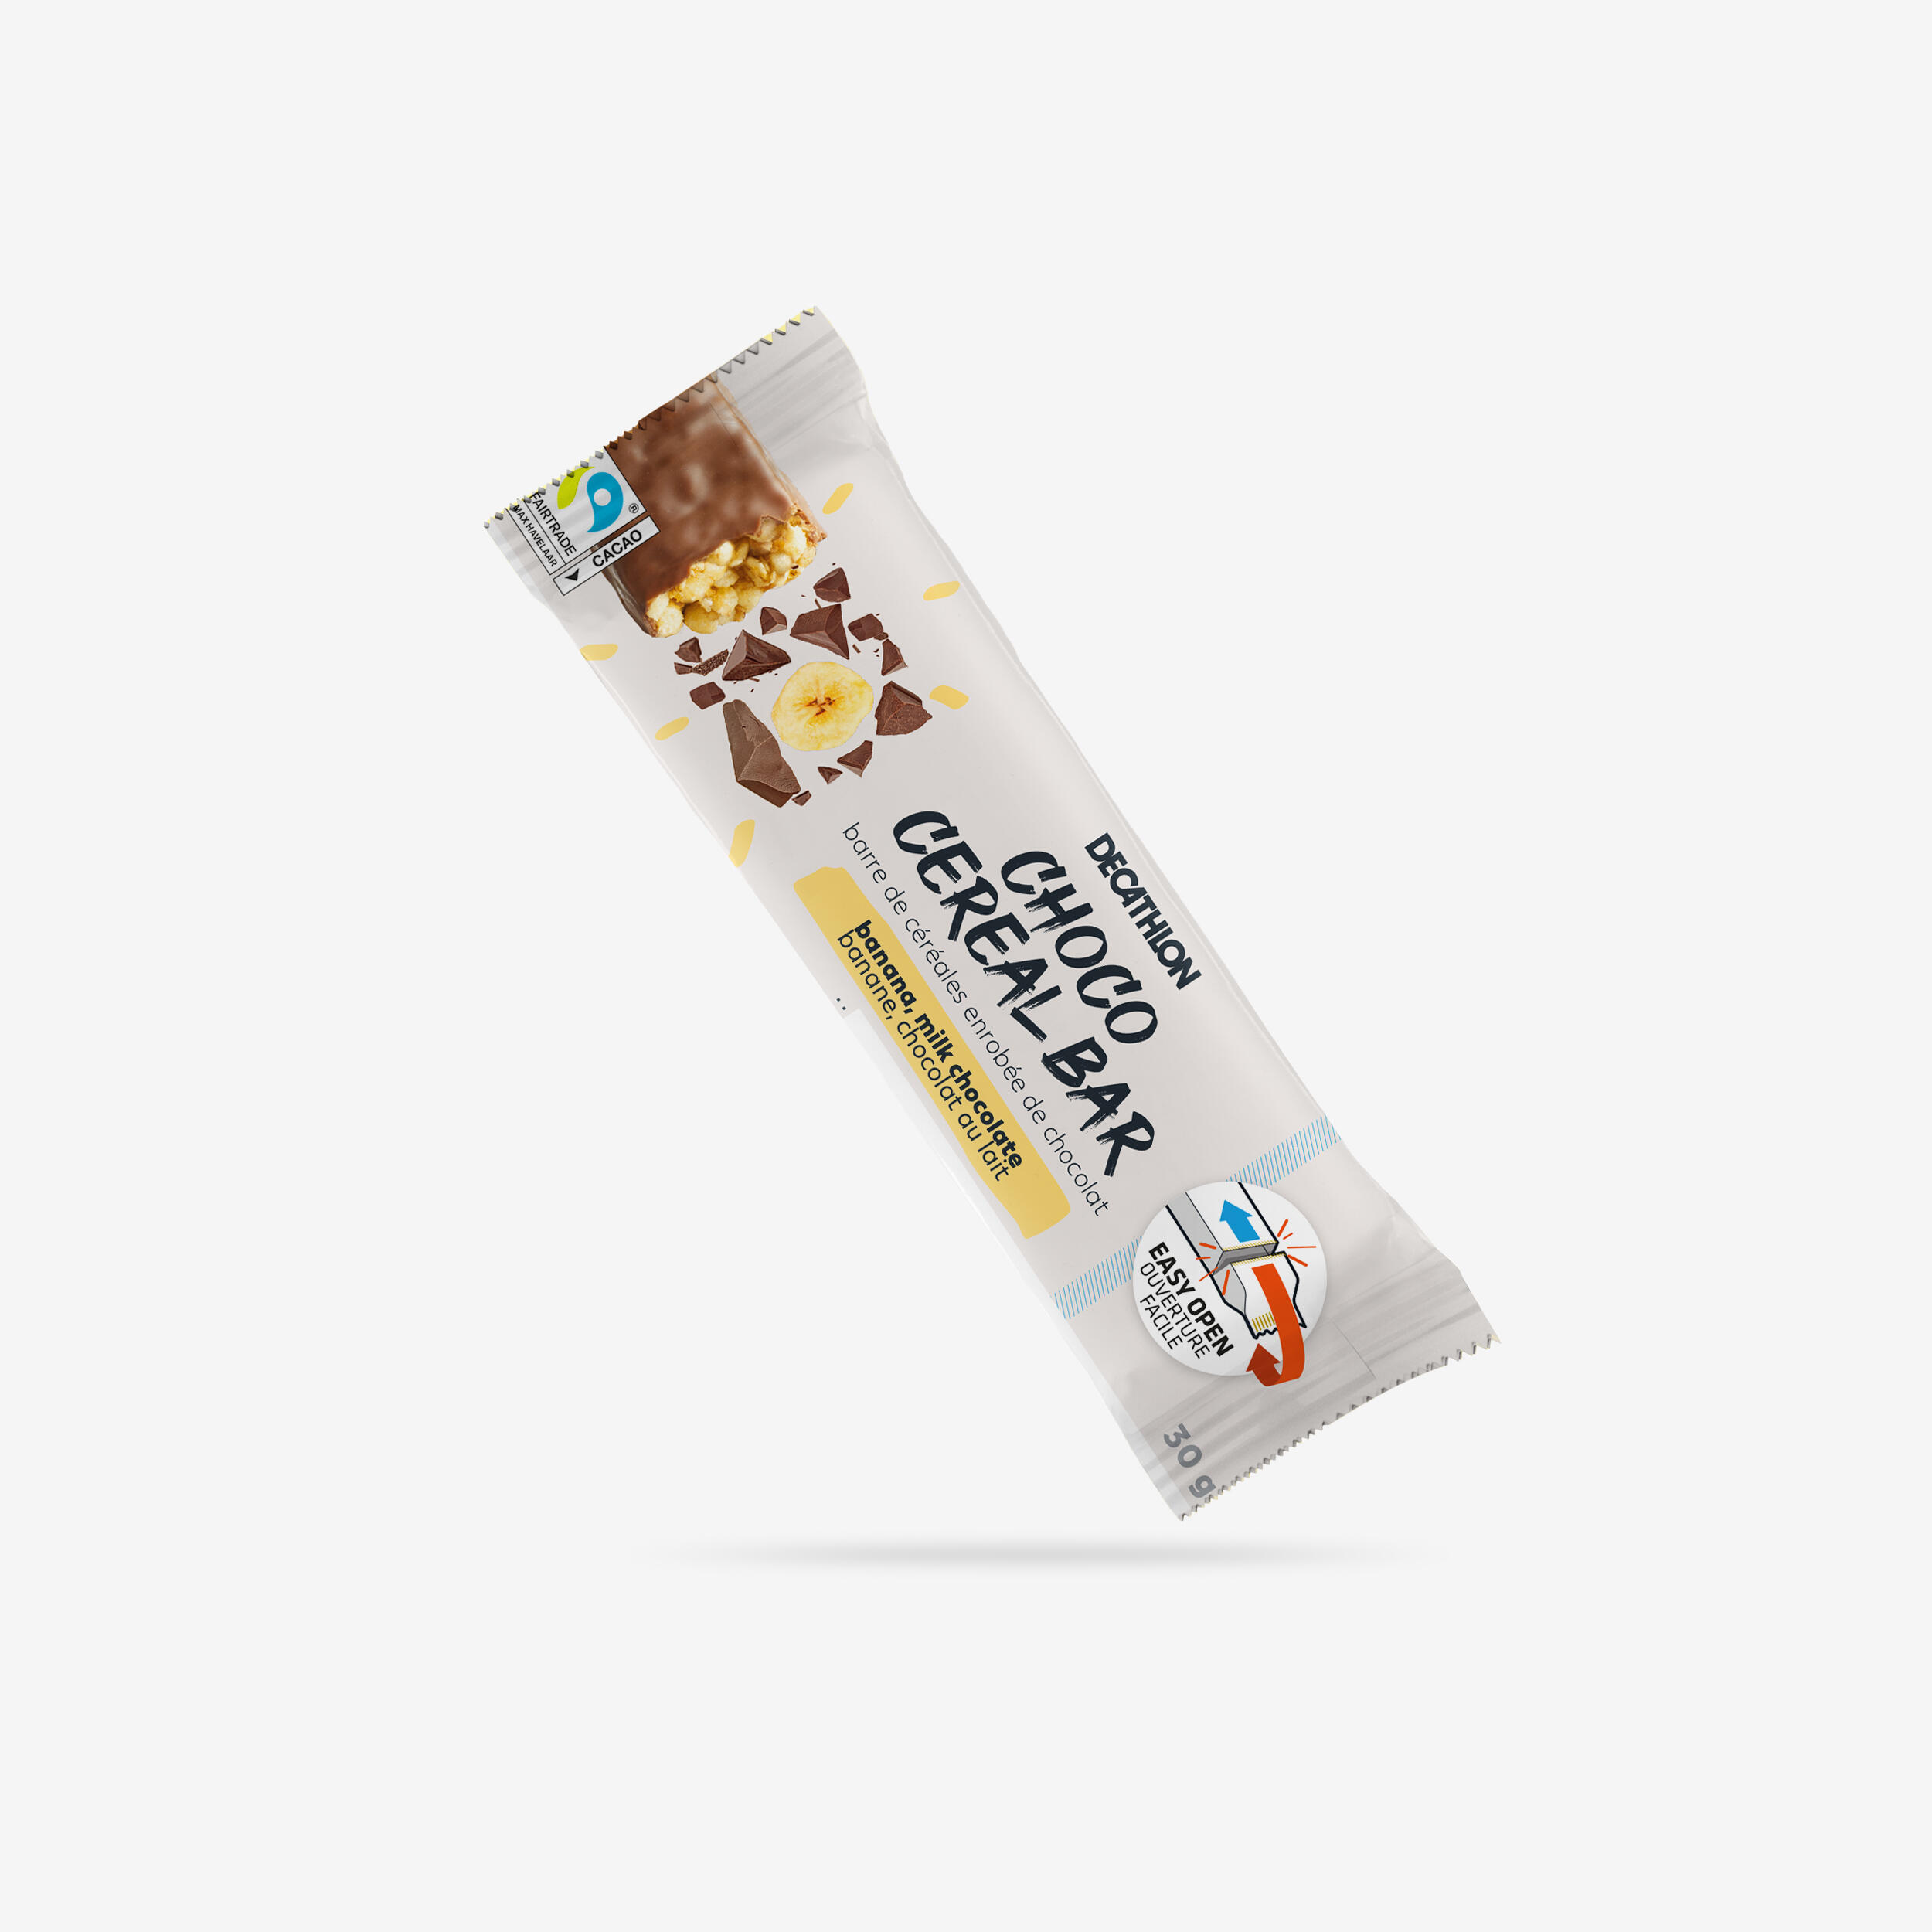 APTONIA Banana-flavoured cereal bar coated in milk chocolate